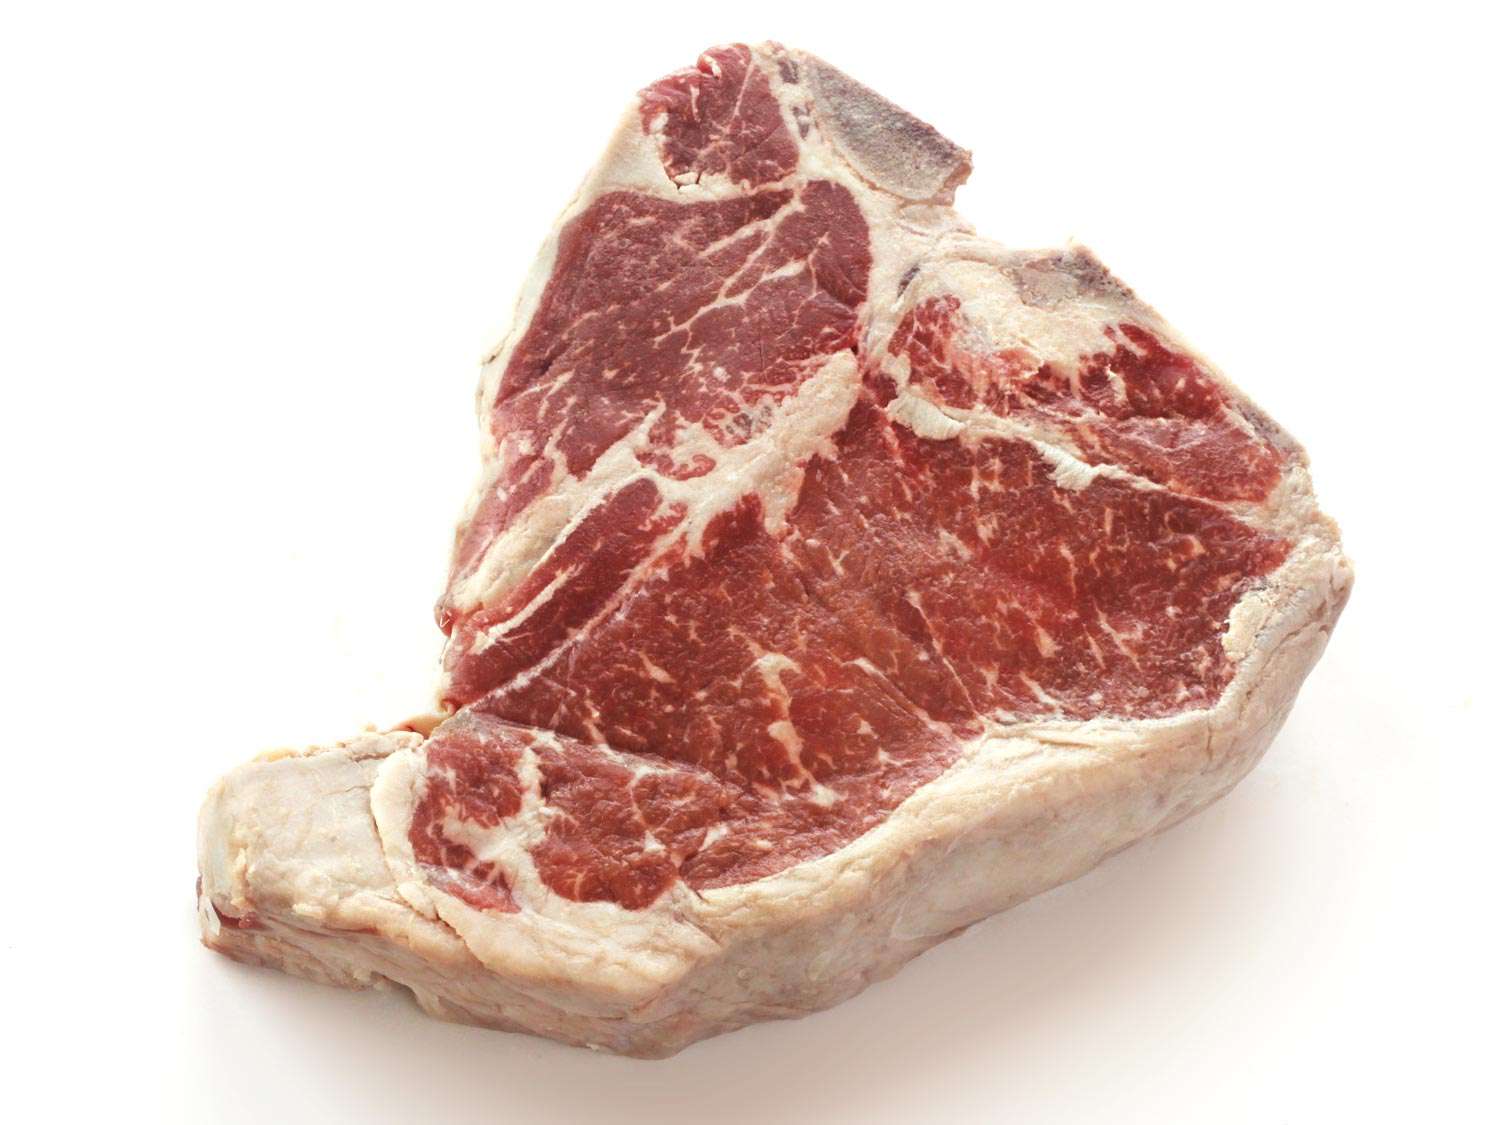 A raw T-bone steak